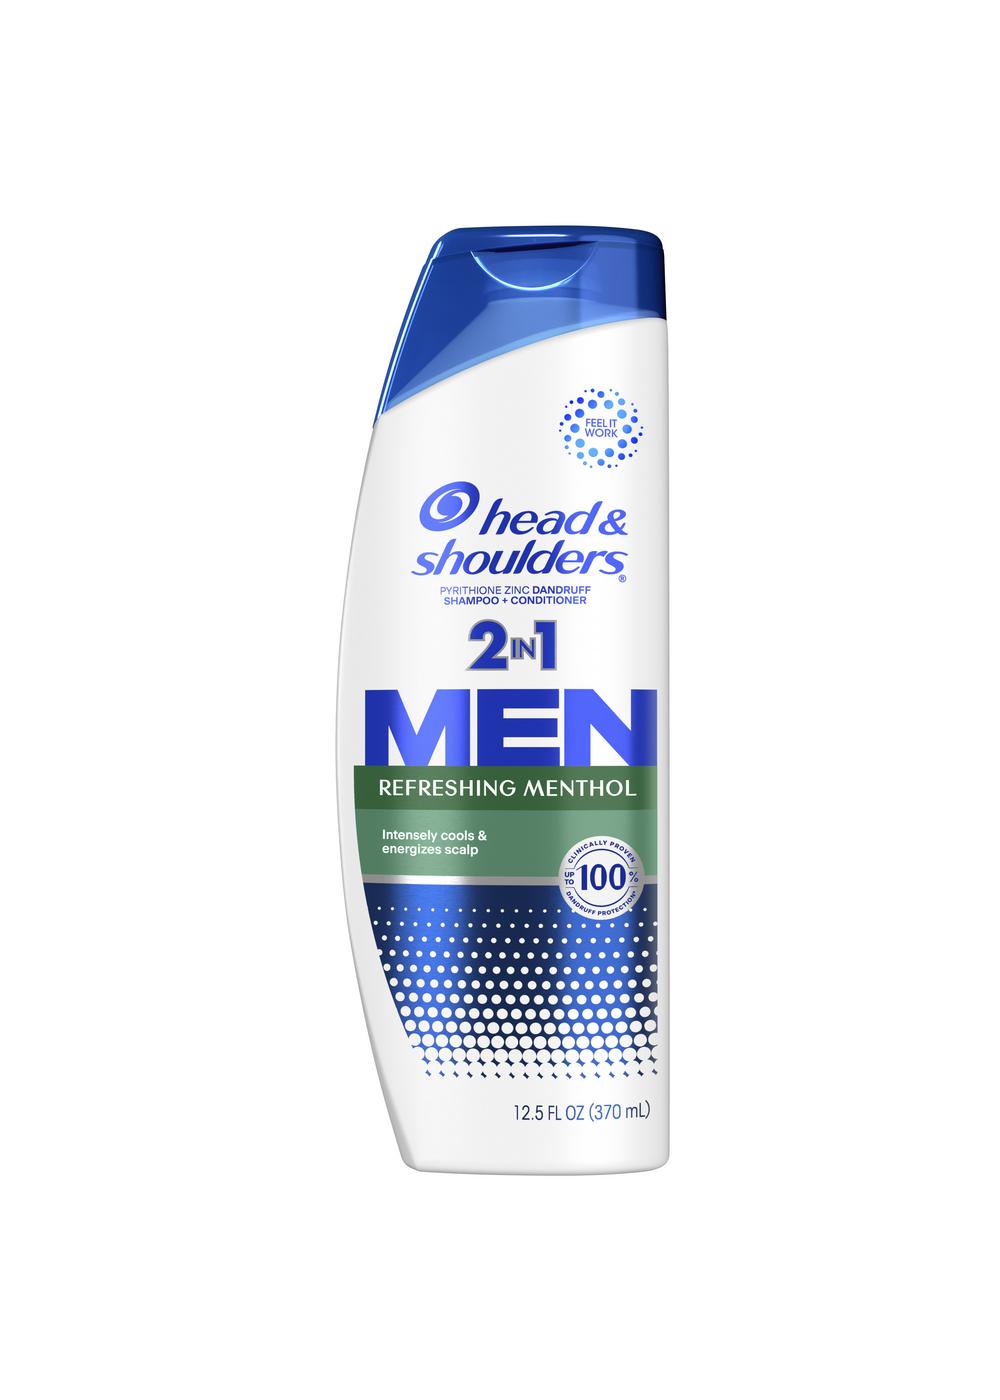 Head & Shoulders 2 in 1 Men Dandruff Shampoo + Conditioner - Refreshing Menthol; image 1 of 11